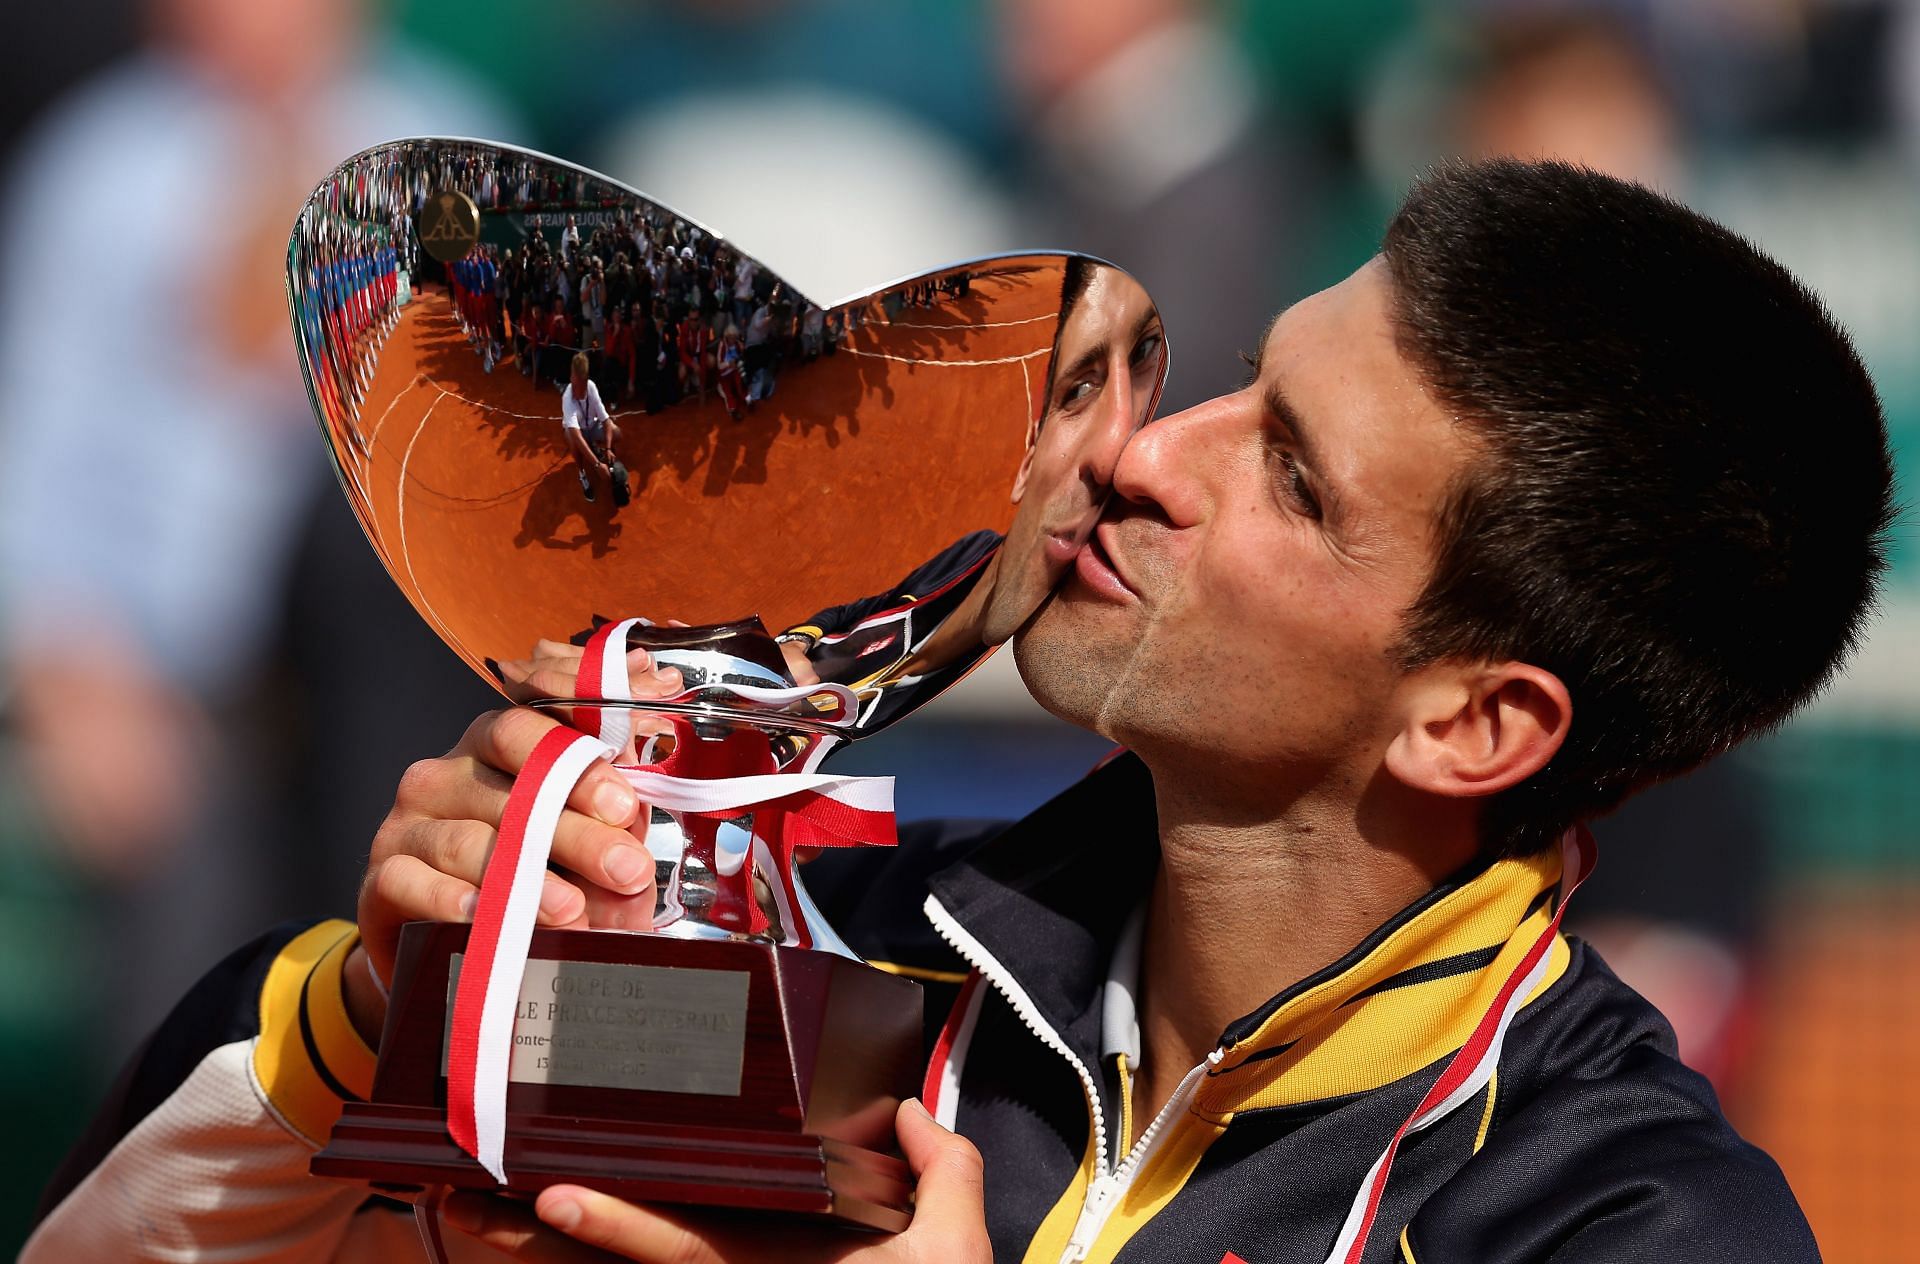 Novak Djokovic with the 2013 Monte Carlo Masters trophy